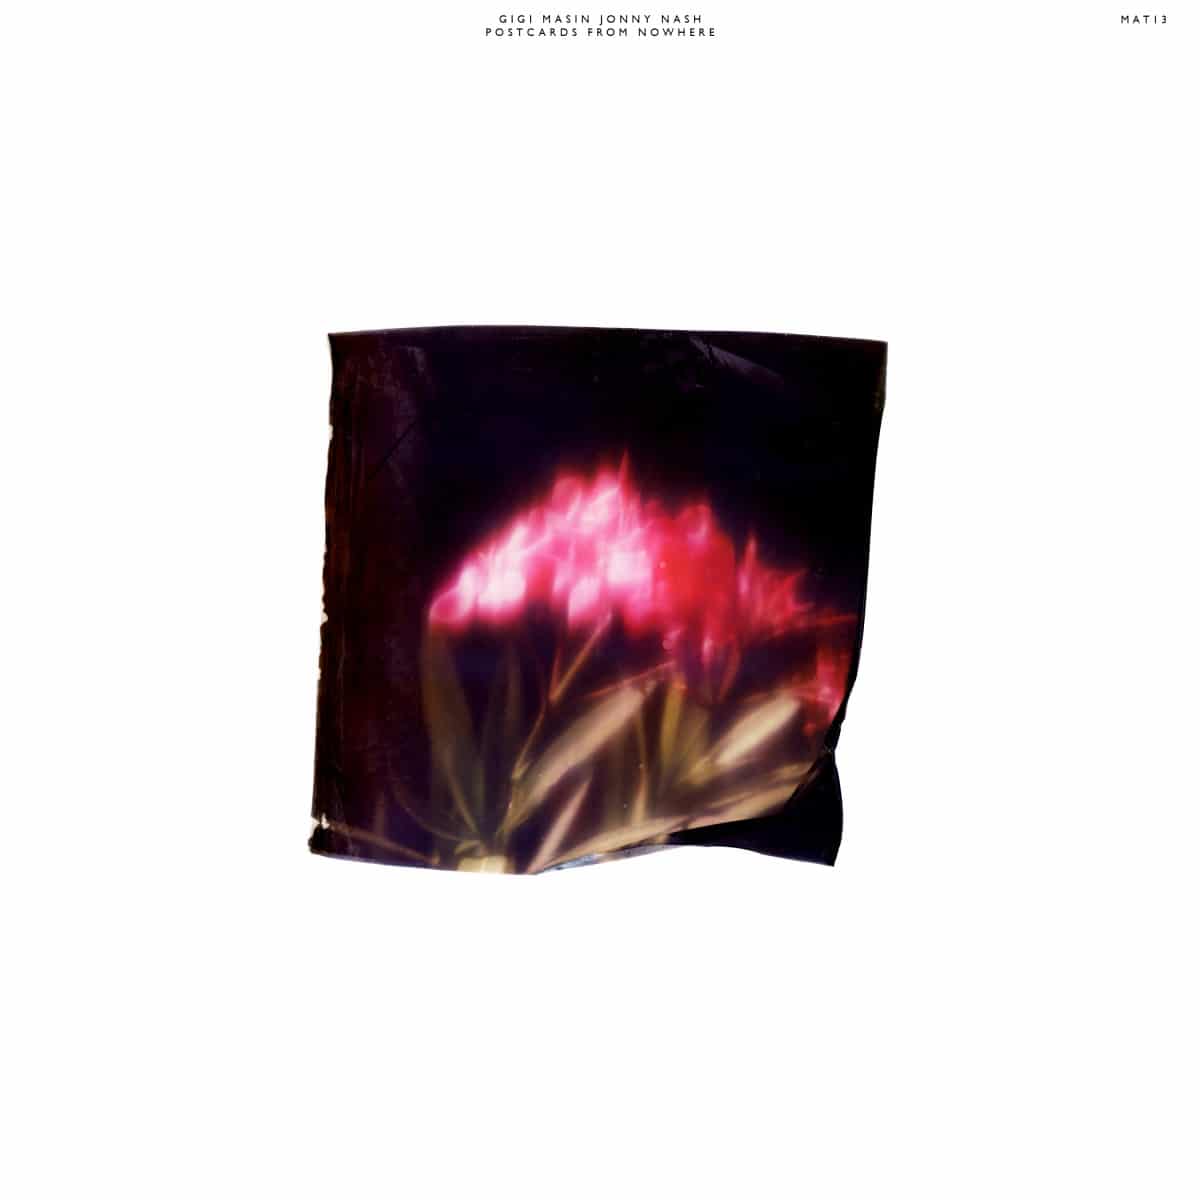 Gigi Masin/Jonny Nash - Postcards From Nowhere - MAT13 - MELODY AS TRUTH